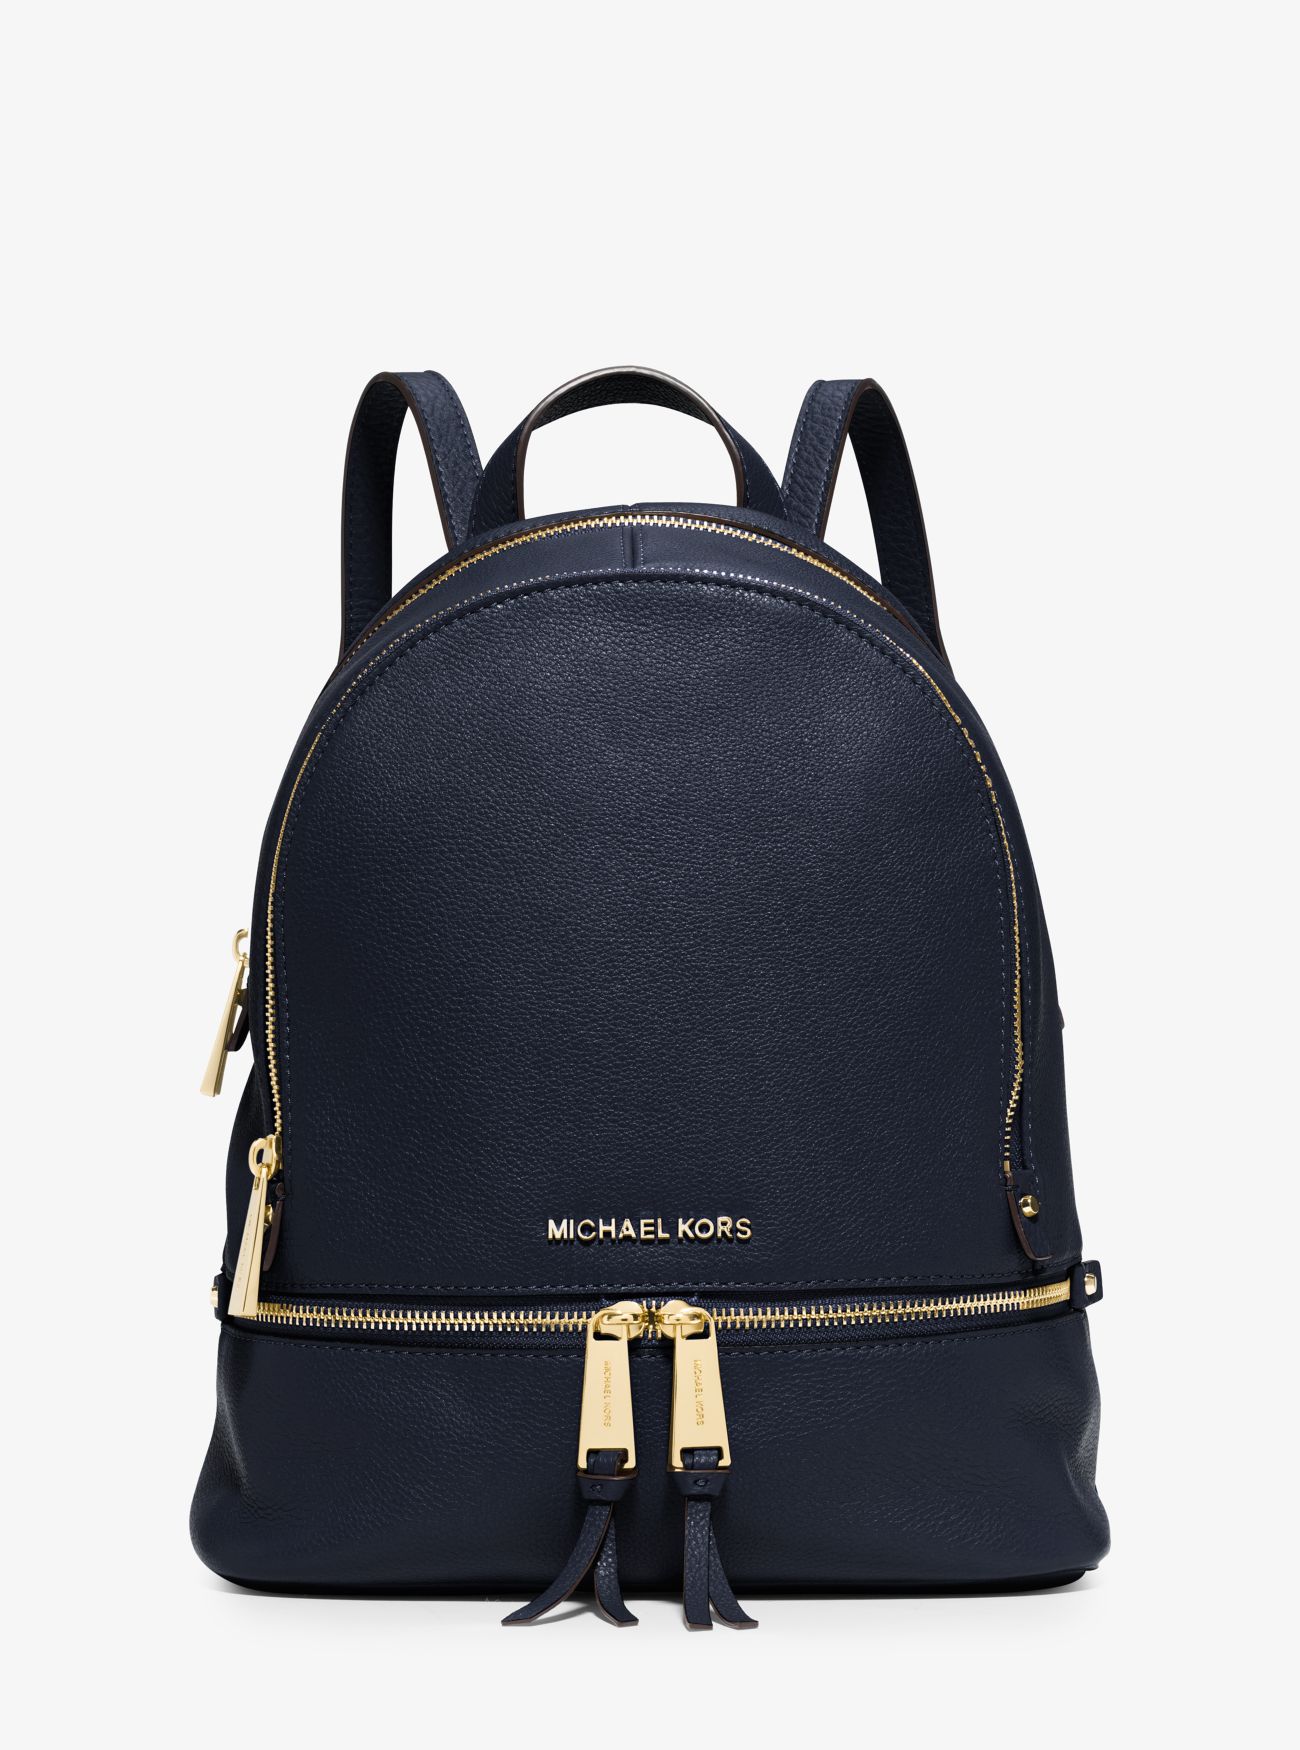 MK Rhea Medium Leather Backpack - Navy - Michael Kors